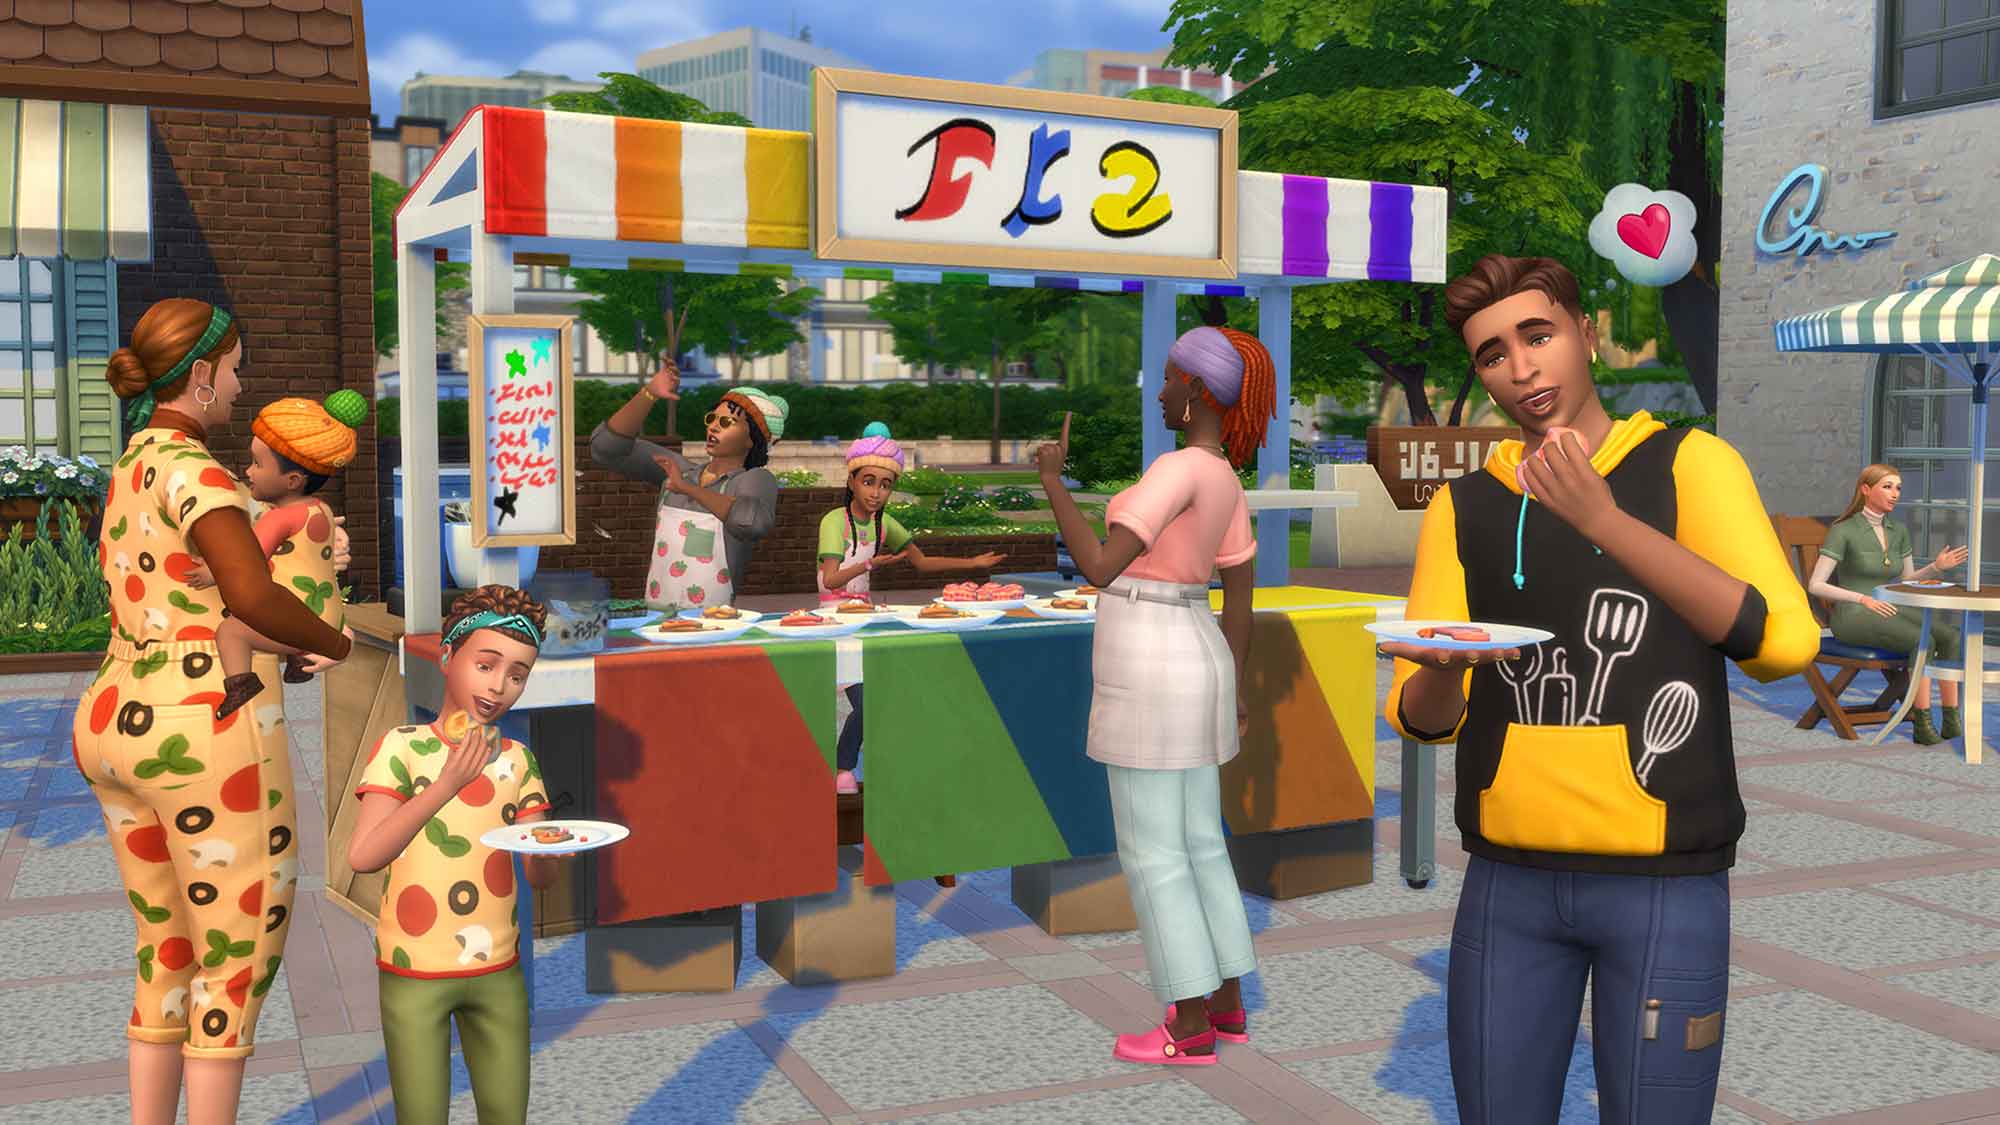 Brands Spiele Check: »Die Sims 4«, Accessoire Pack »Lukrative Hobbyküche«, Electronic Arts